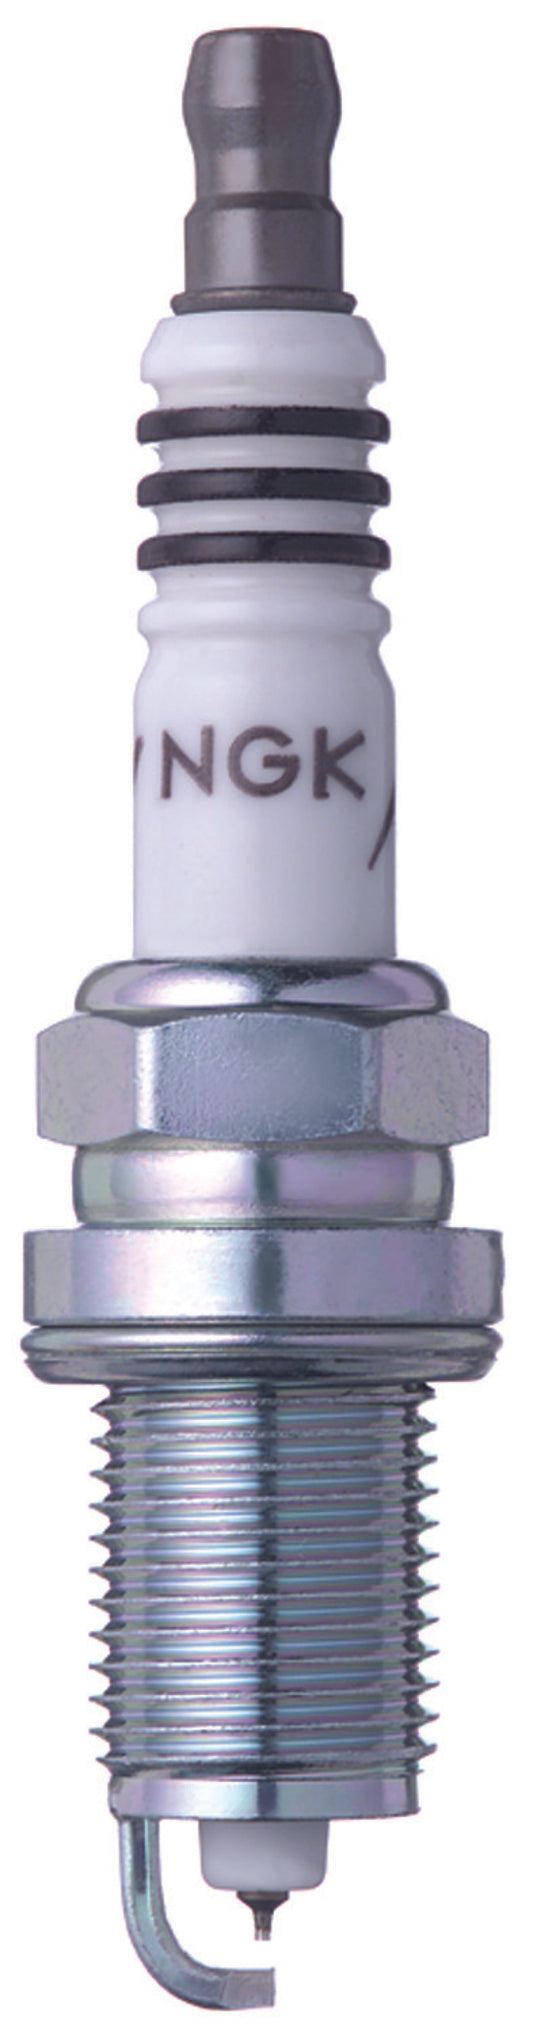 NGK Iridium IX Spark Plug Box of 4 (ZFR5FIX-E)